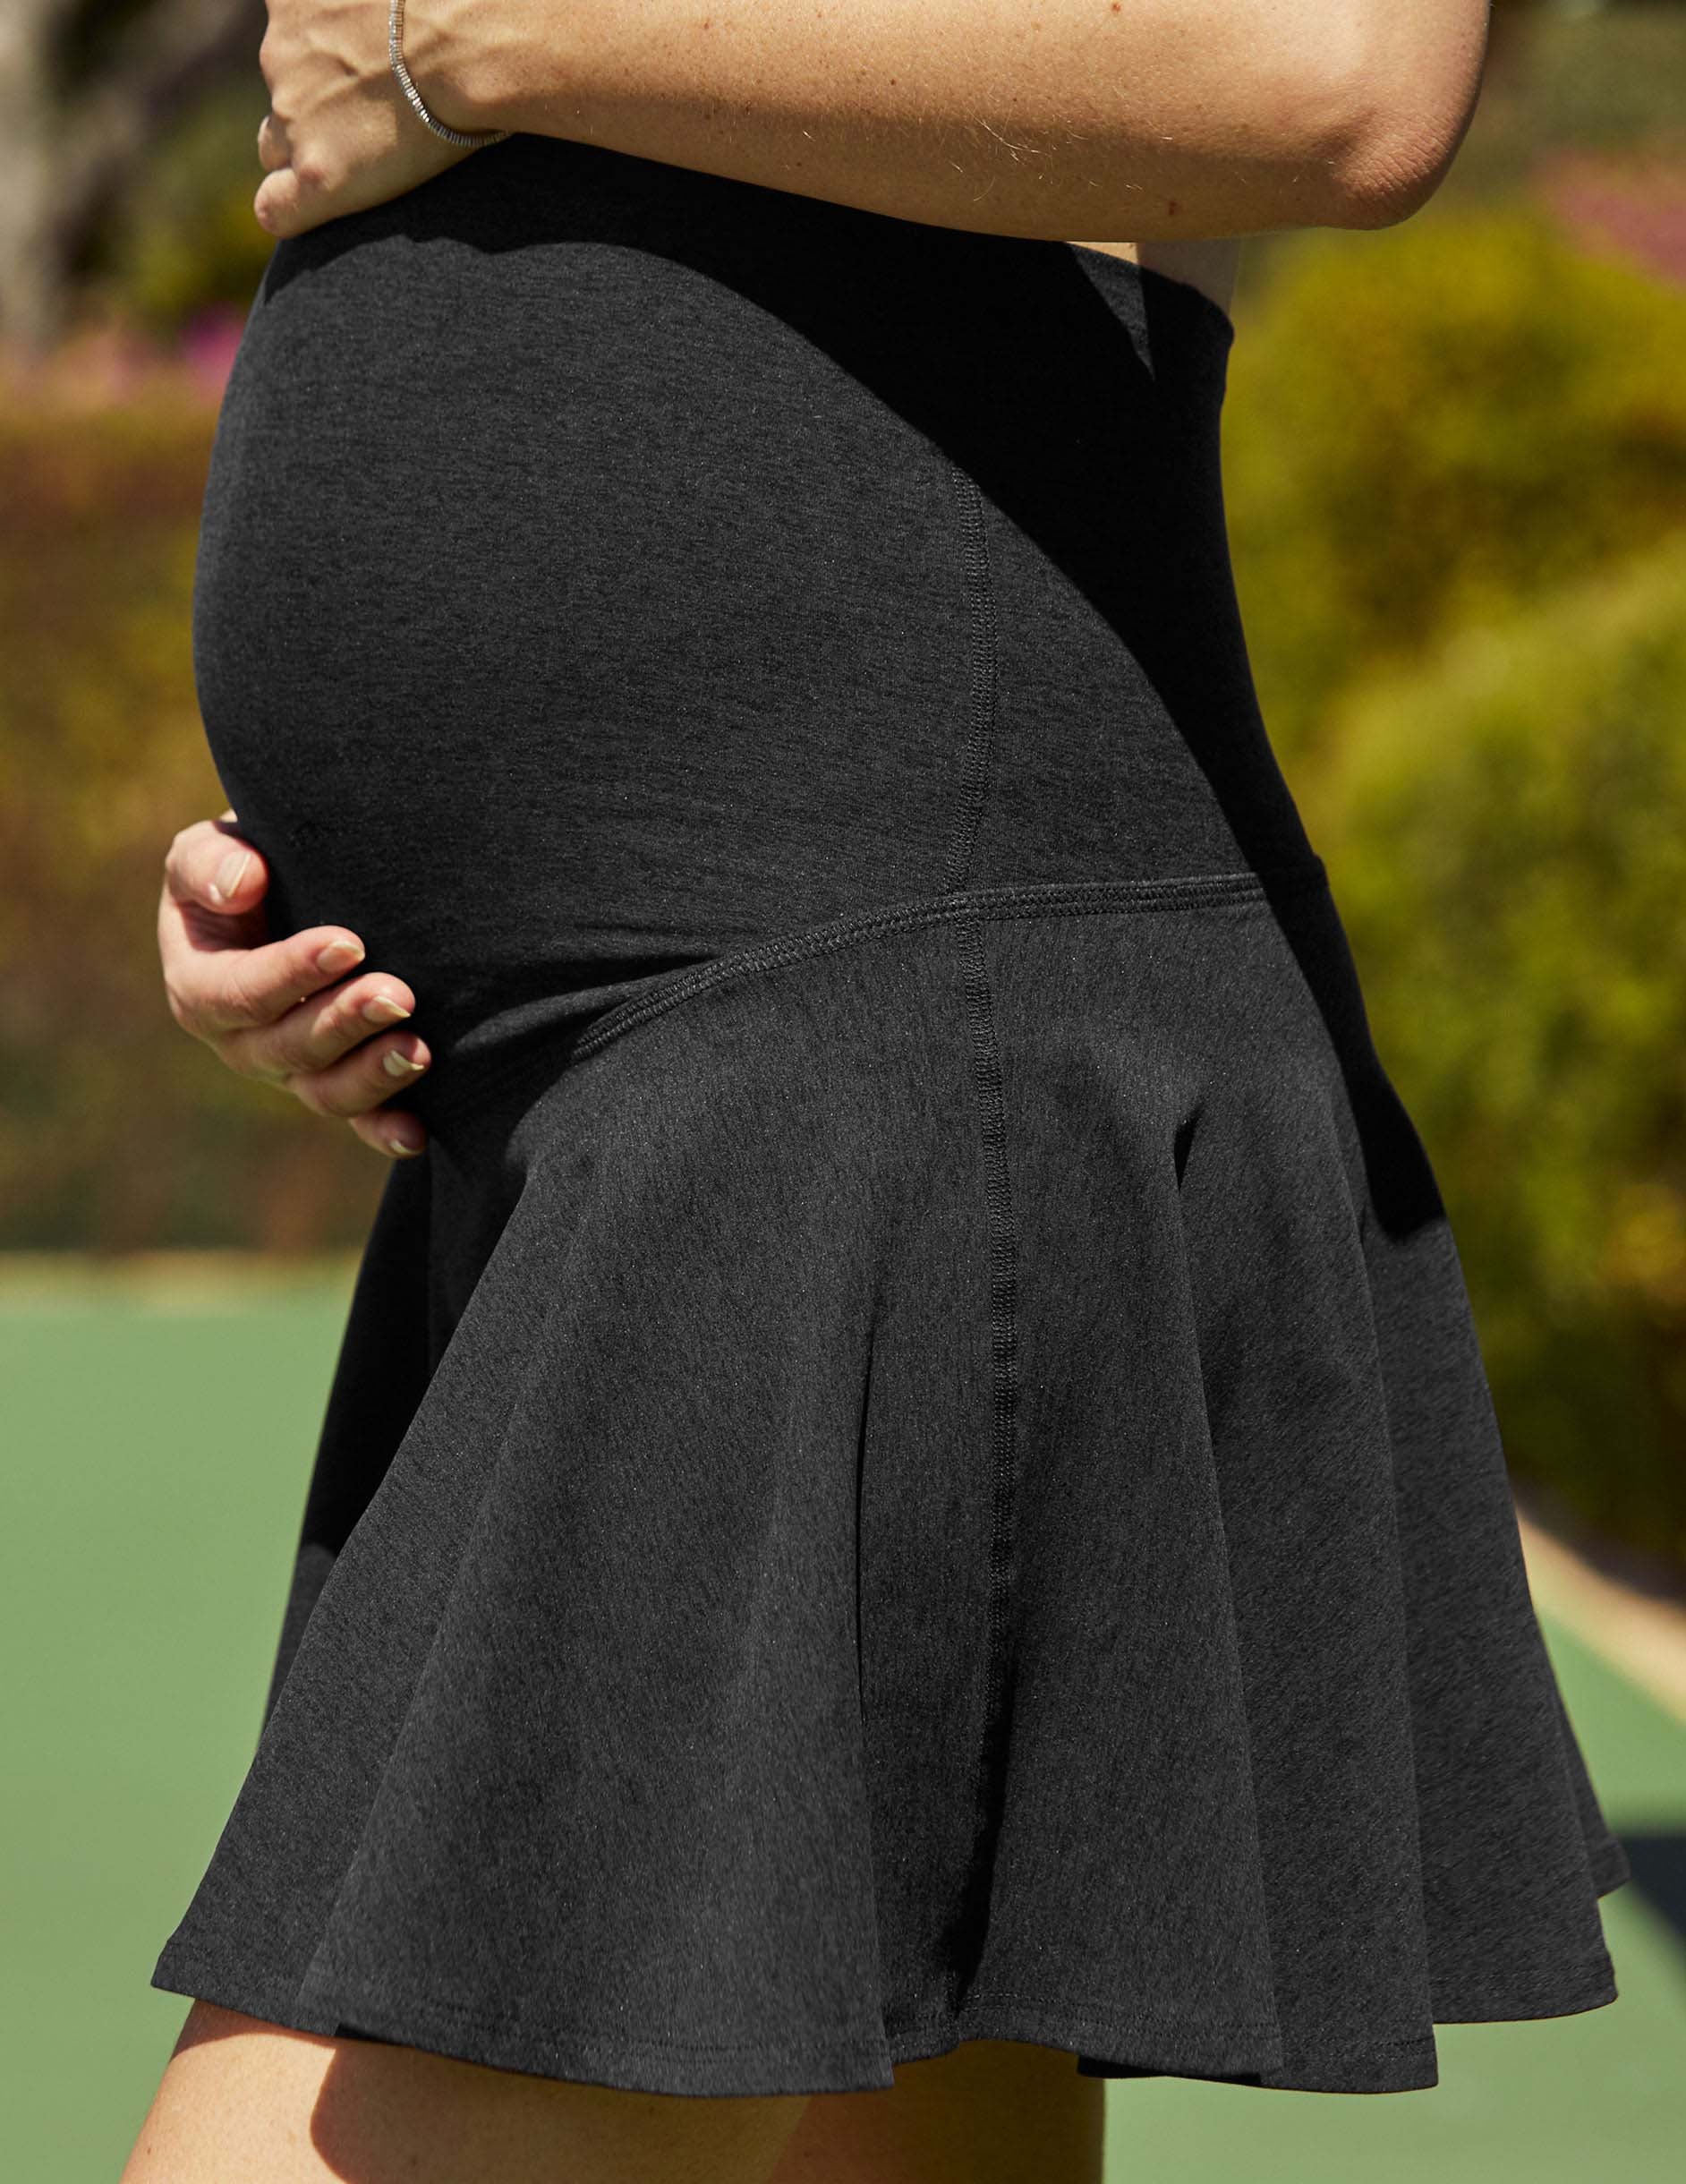 maternity bottom